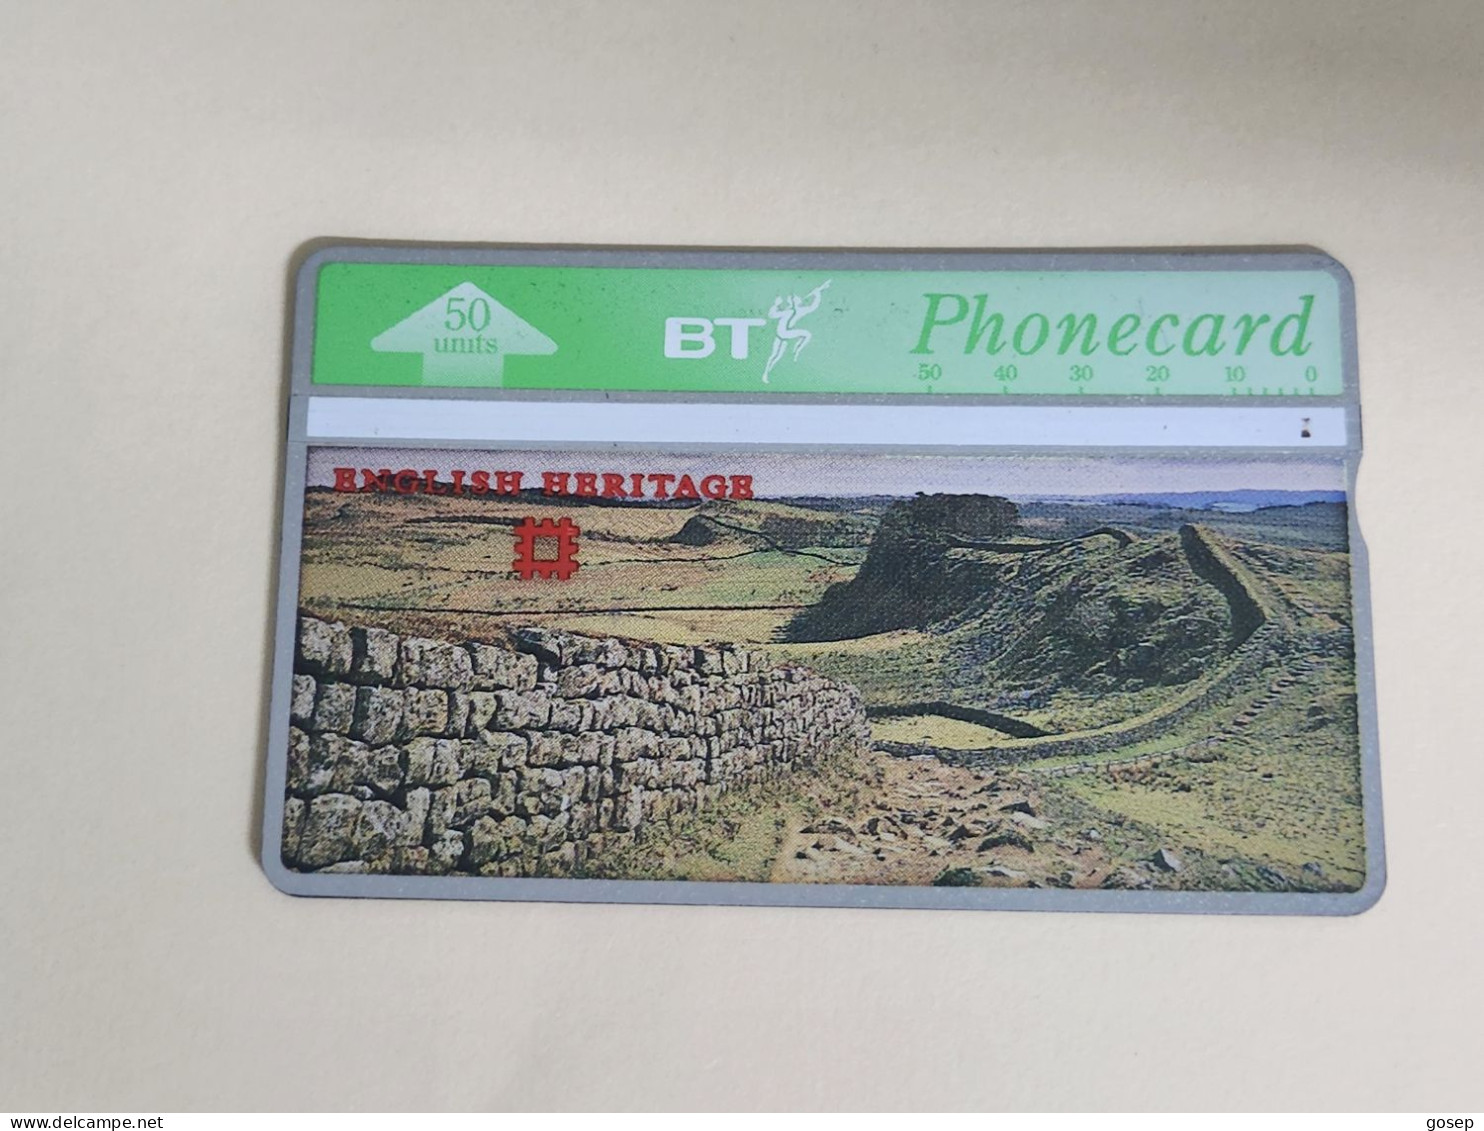 United Kingdom-(BTA107)-HERITAGE-Hadrian's Wall-(181)(50units)(528E62834)price Cataloge3.00£-used+1card Prepiad Free - BT Emissions Publicitaires